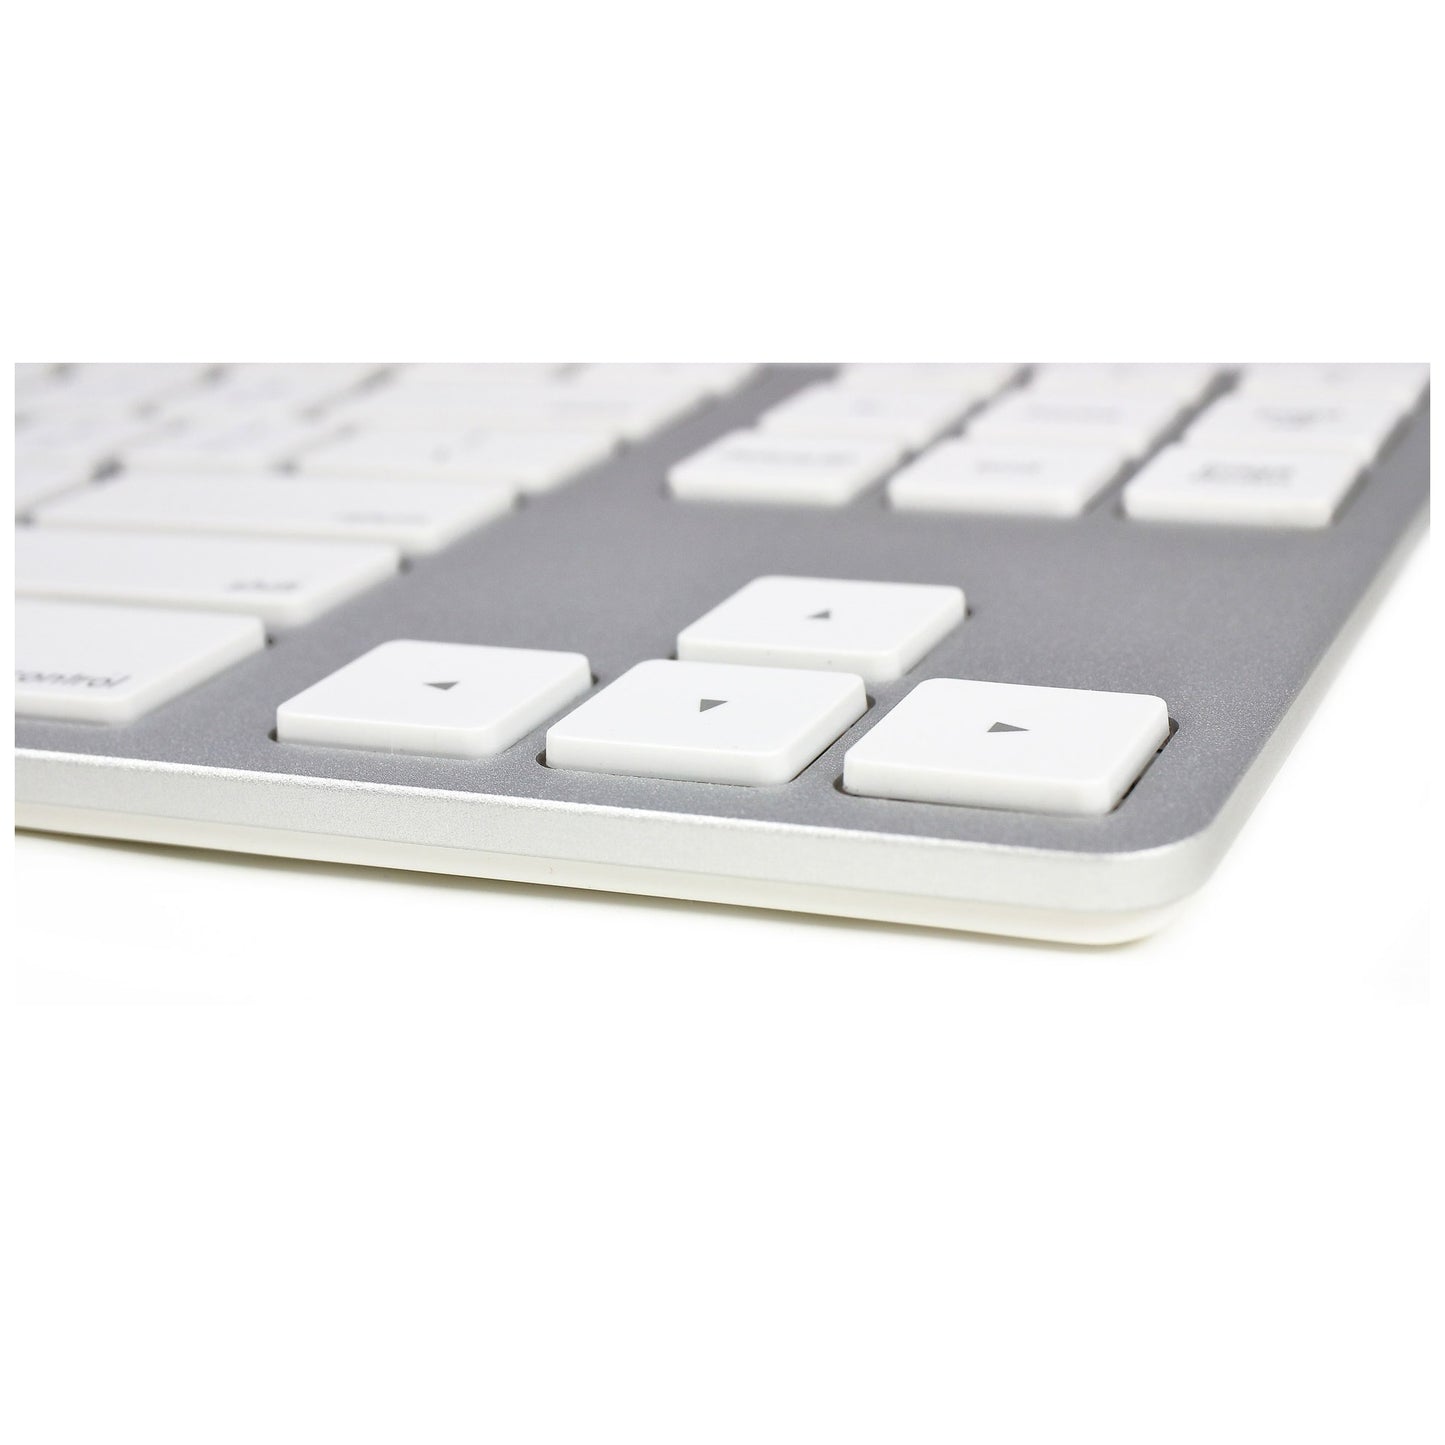 Matias Wired Aluminum Tenkeyless Keyboard for Mac